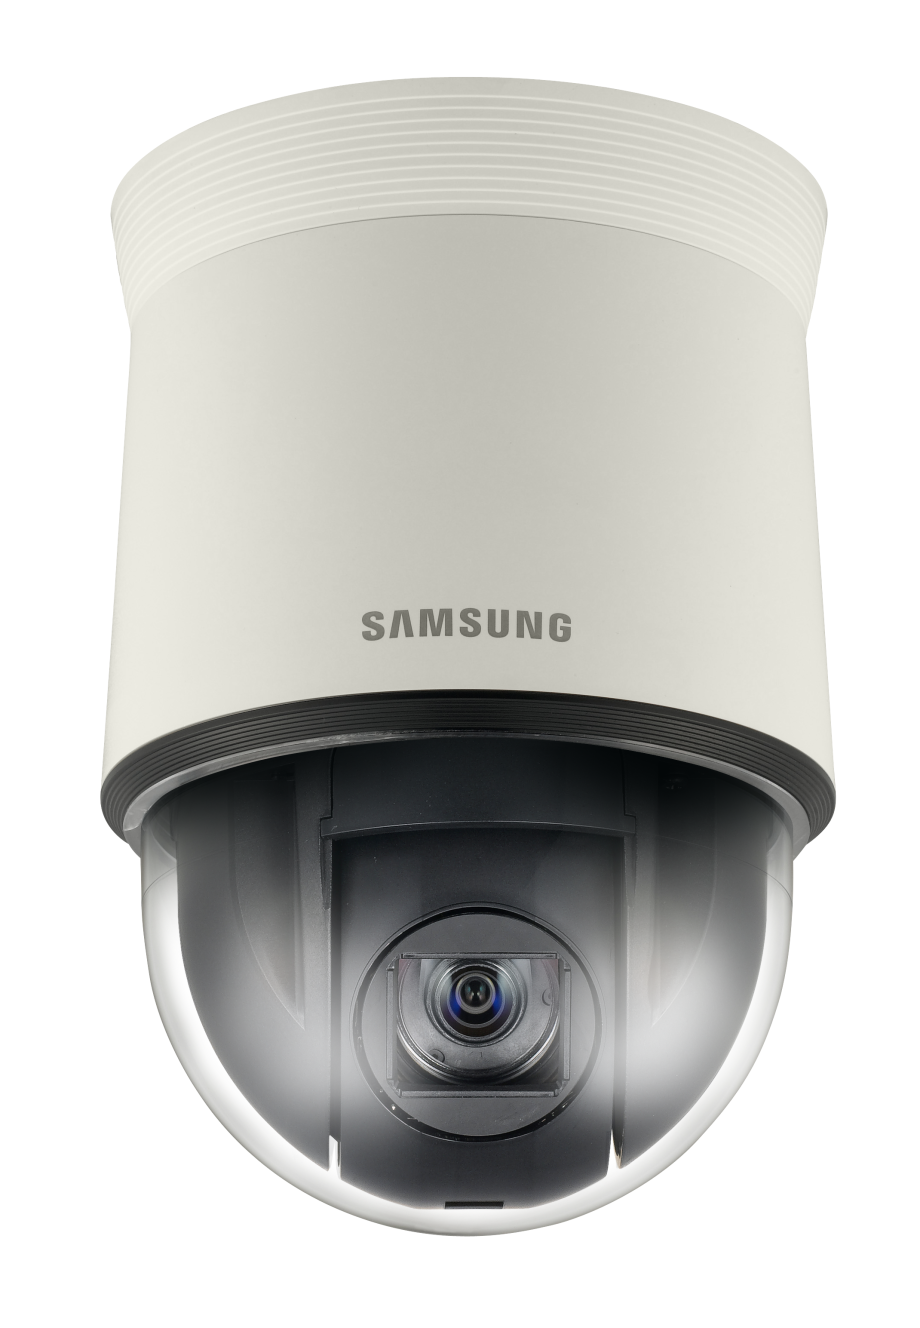 Samsung SNP-5321 1.3 Megapixel HD 32x Network PTZ Dome Camera